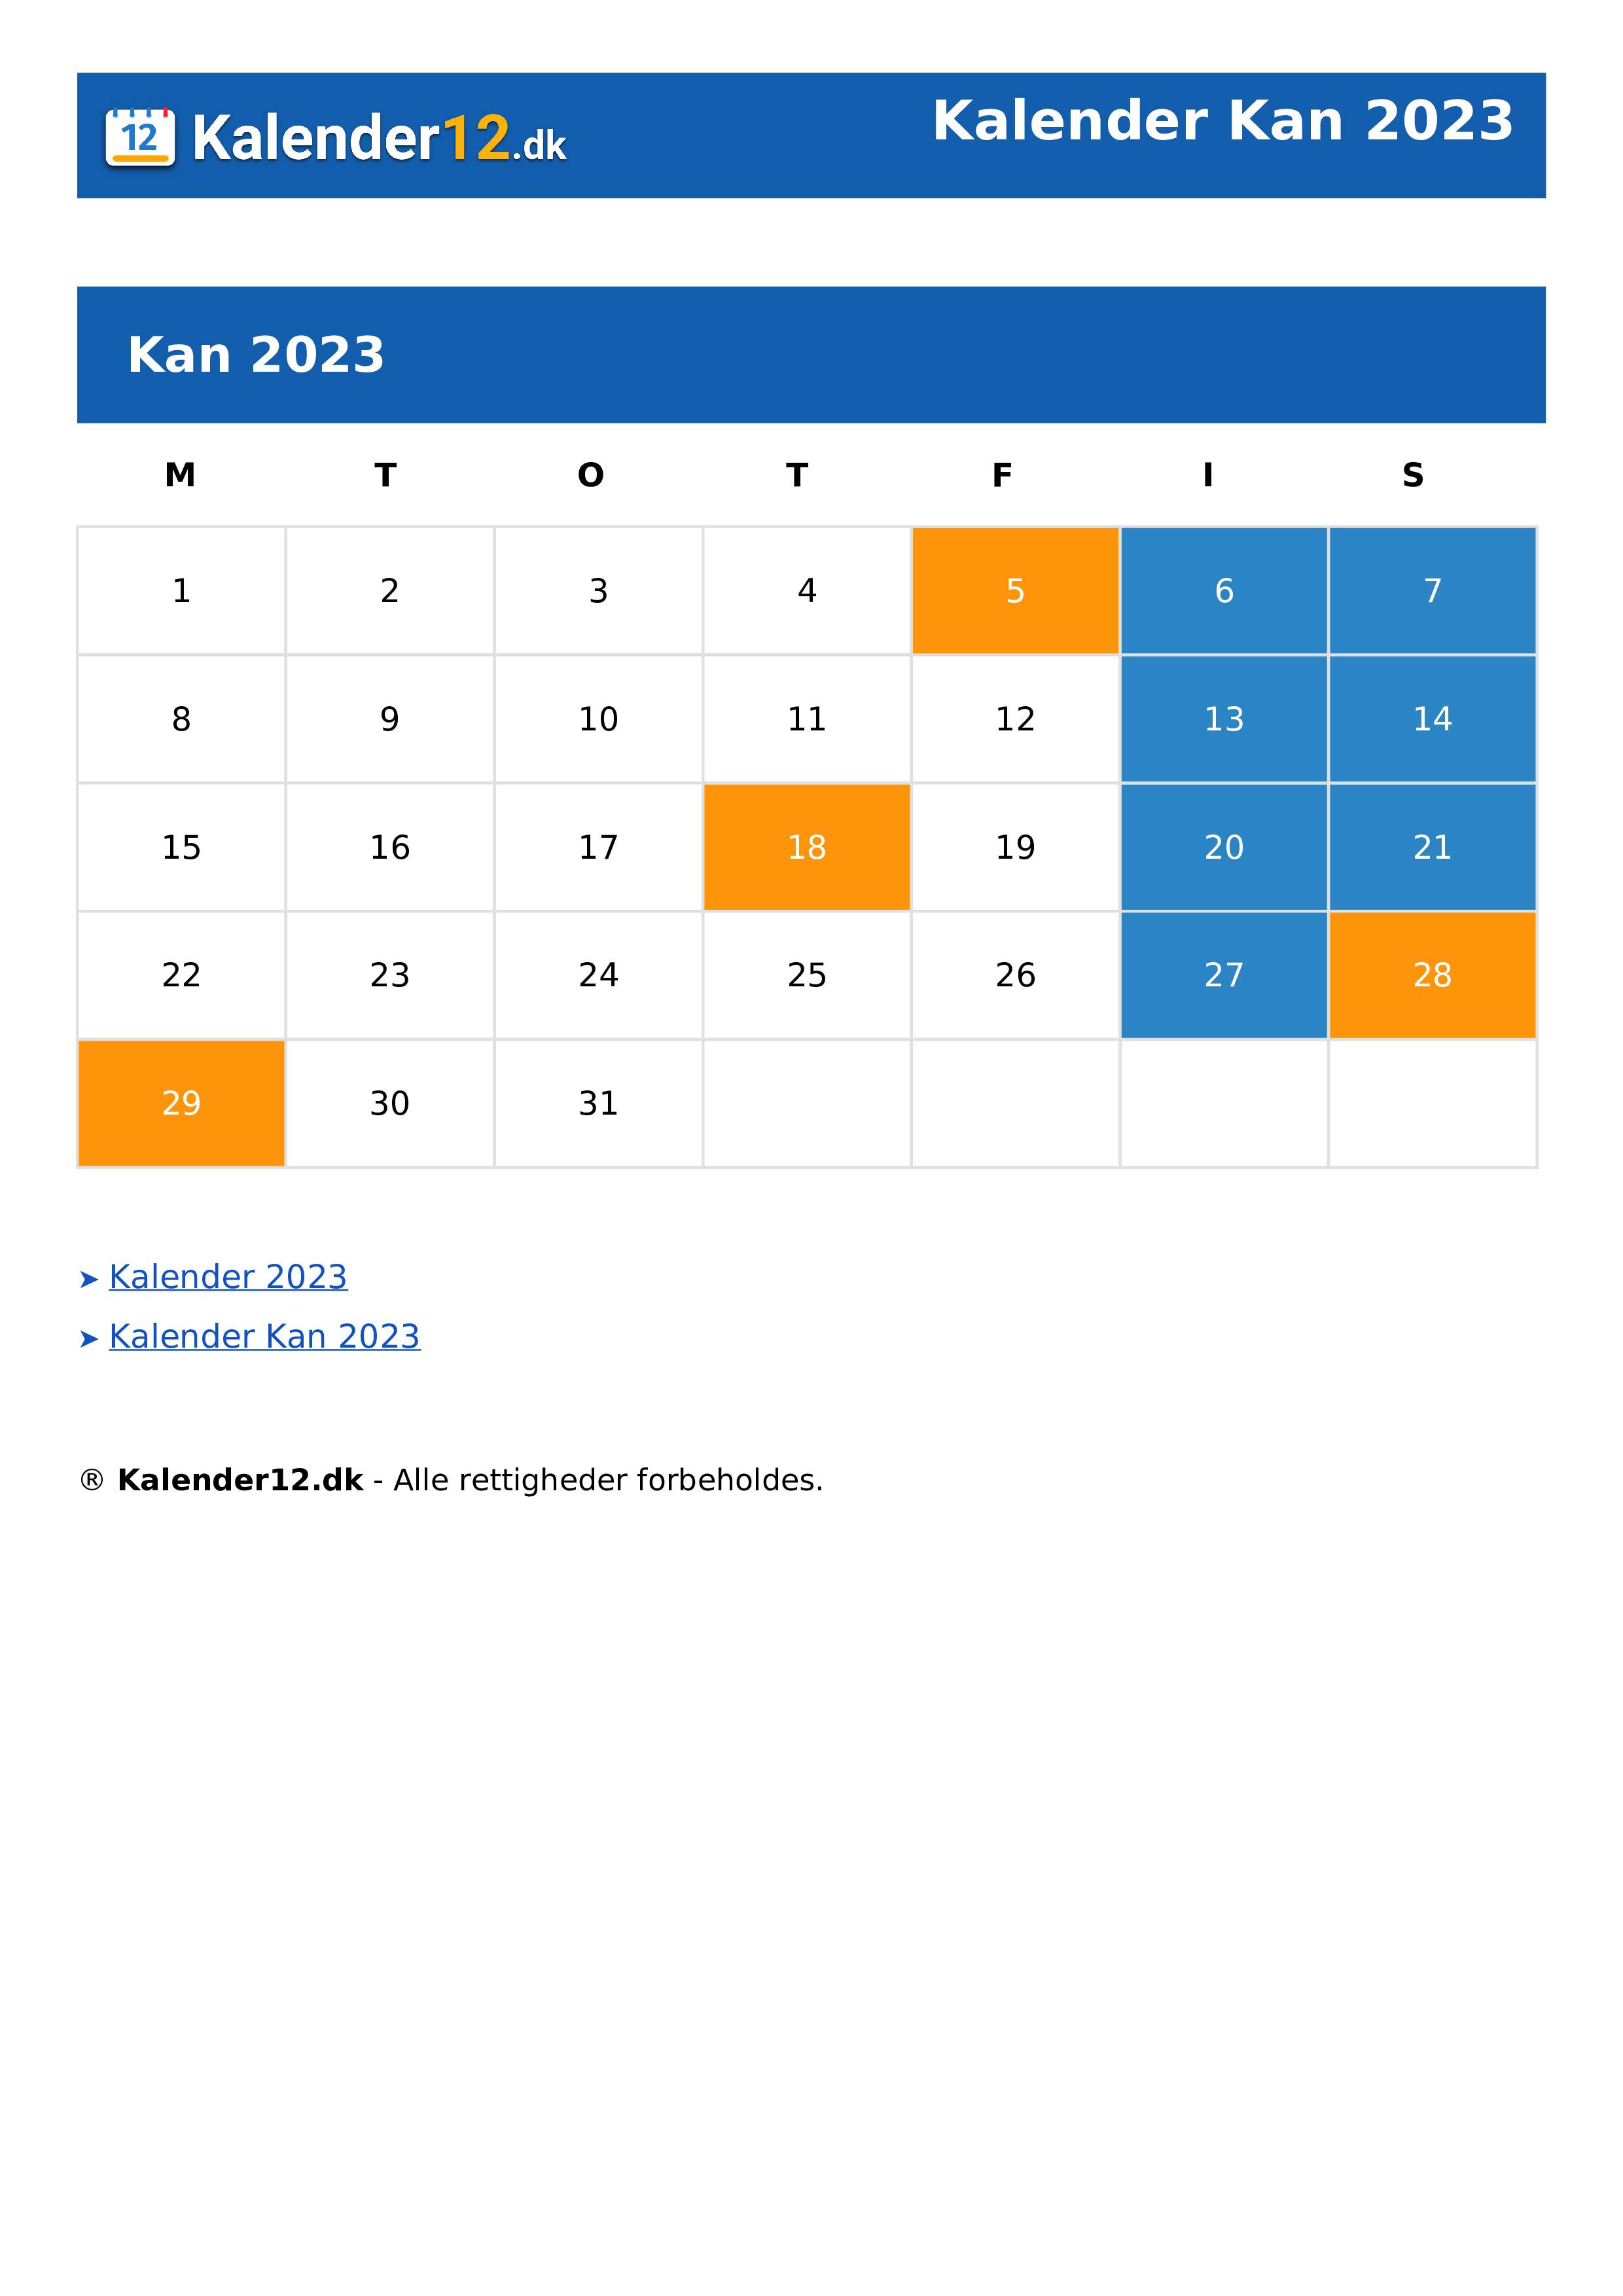 Calendar Kan 2023